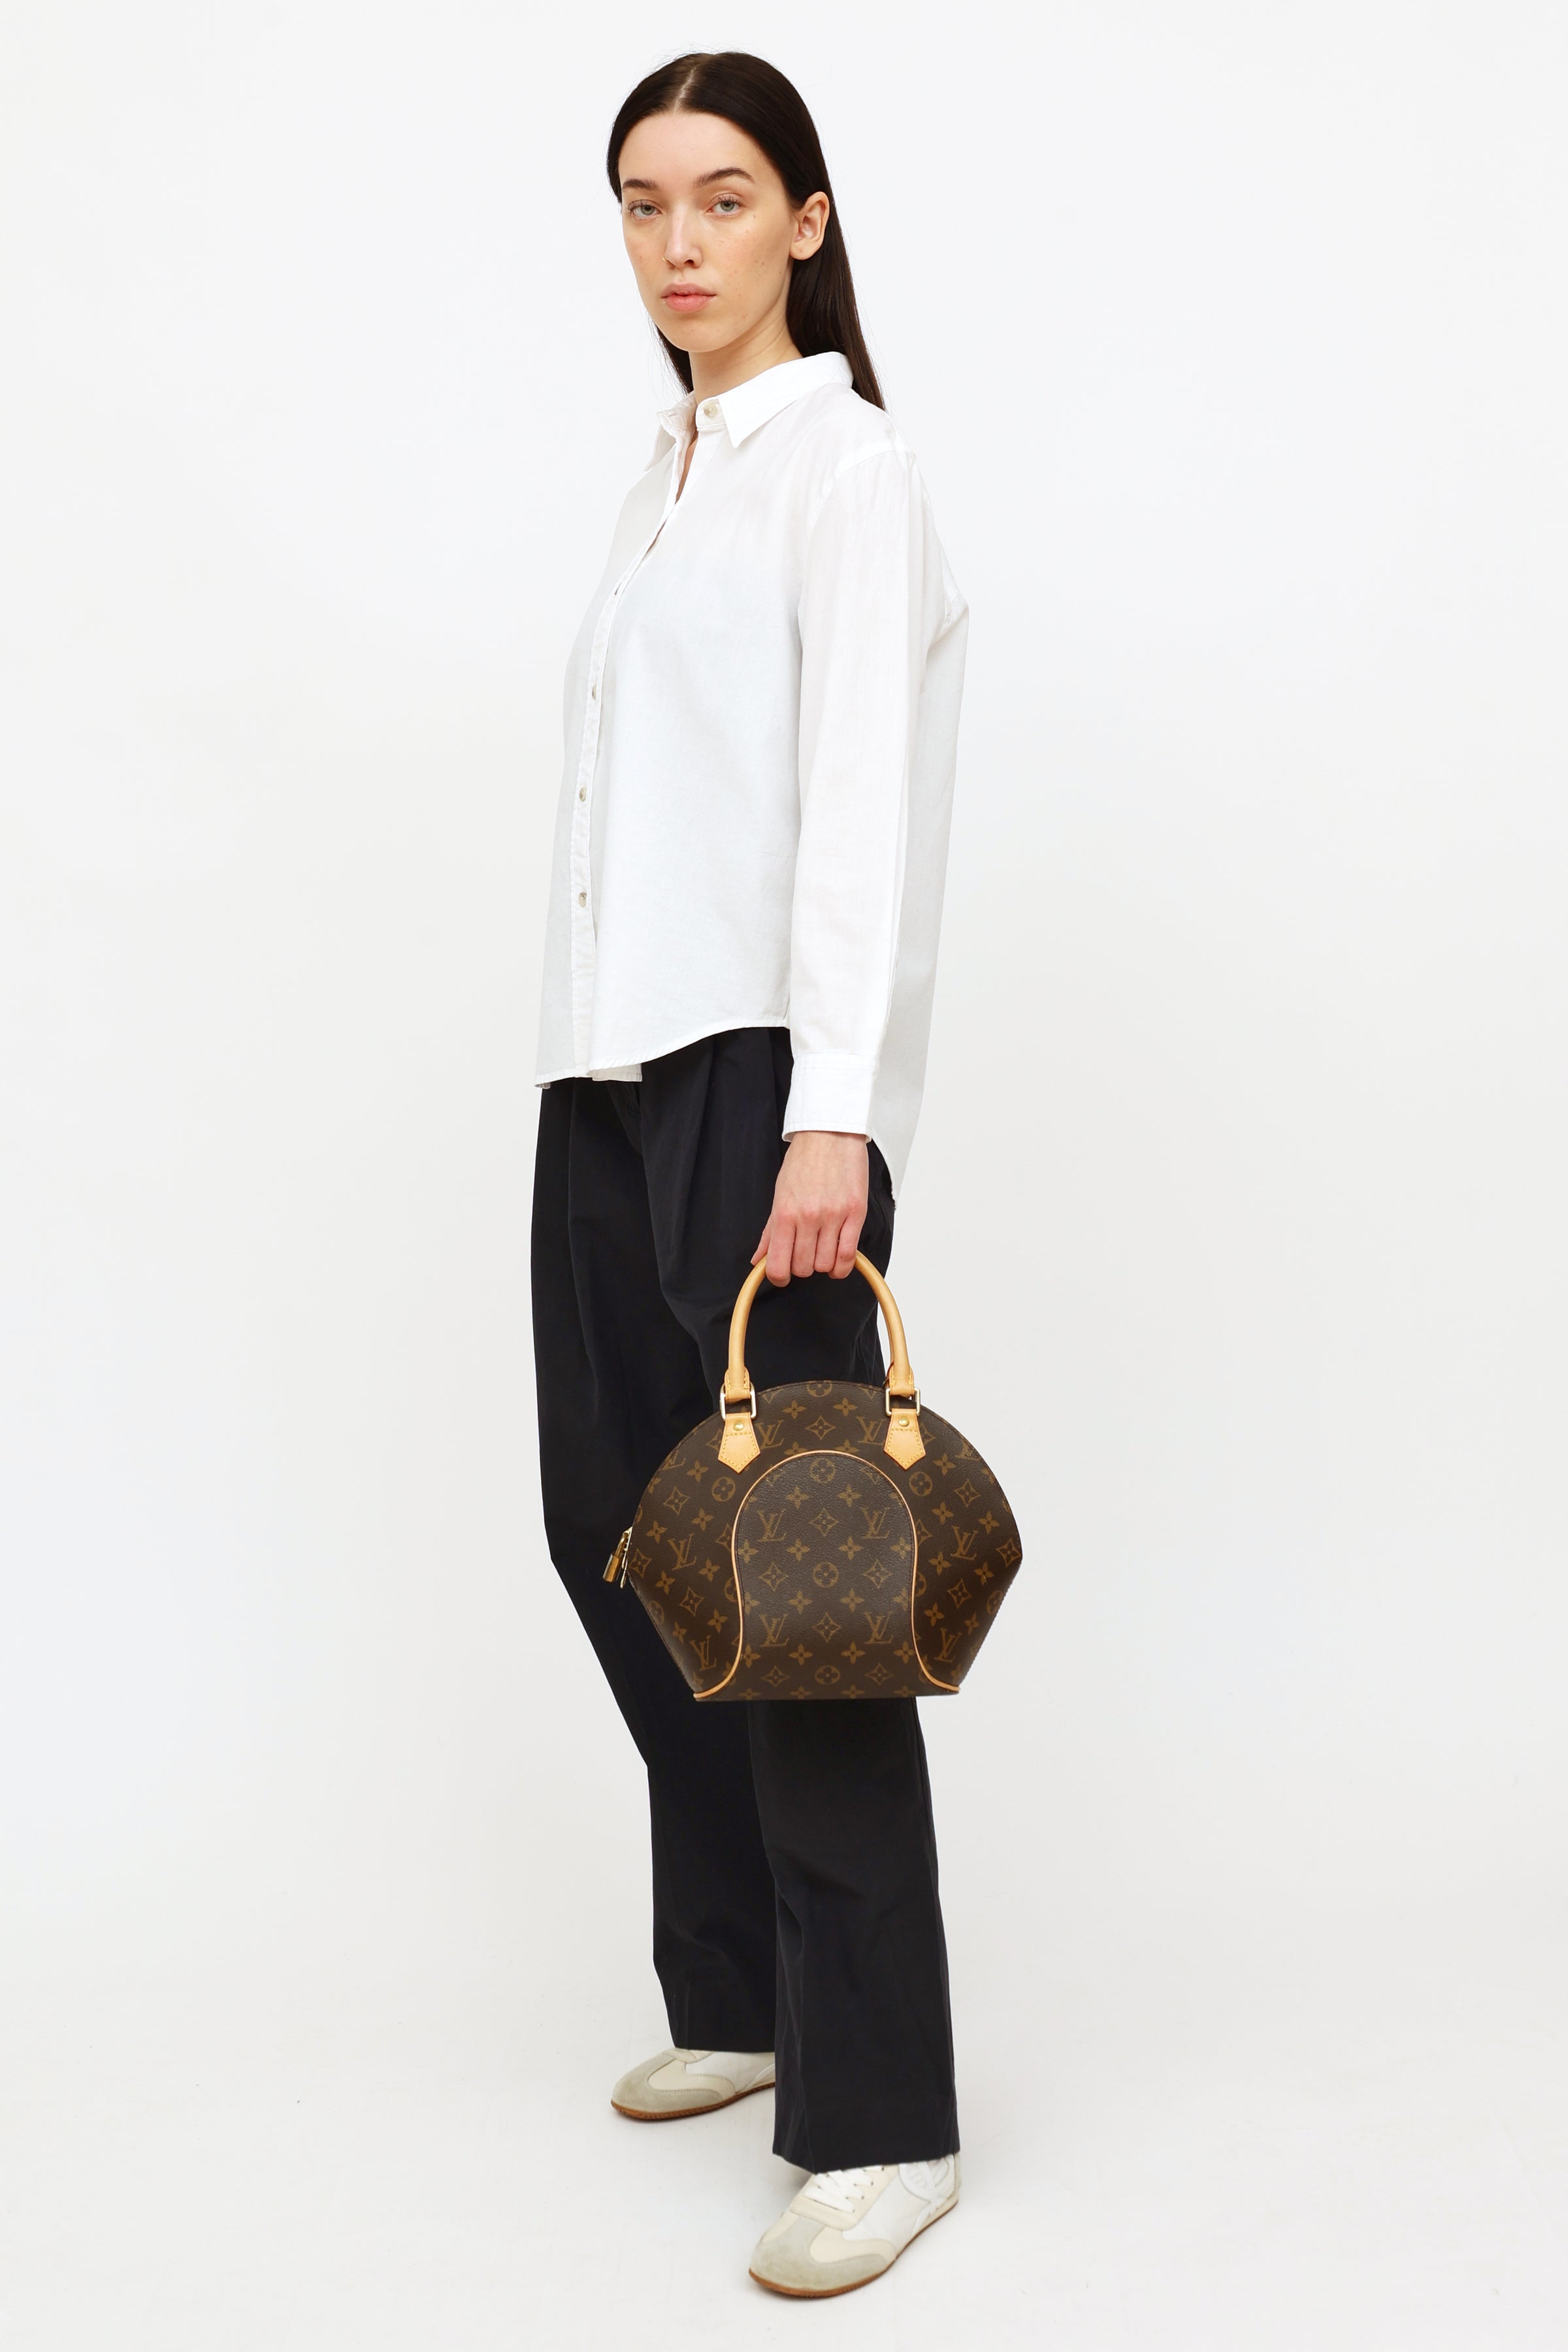 Lot 295 - Louis Vuitton - Ellipse MM bag, in monogram